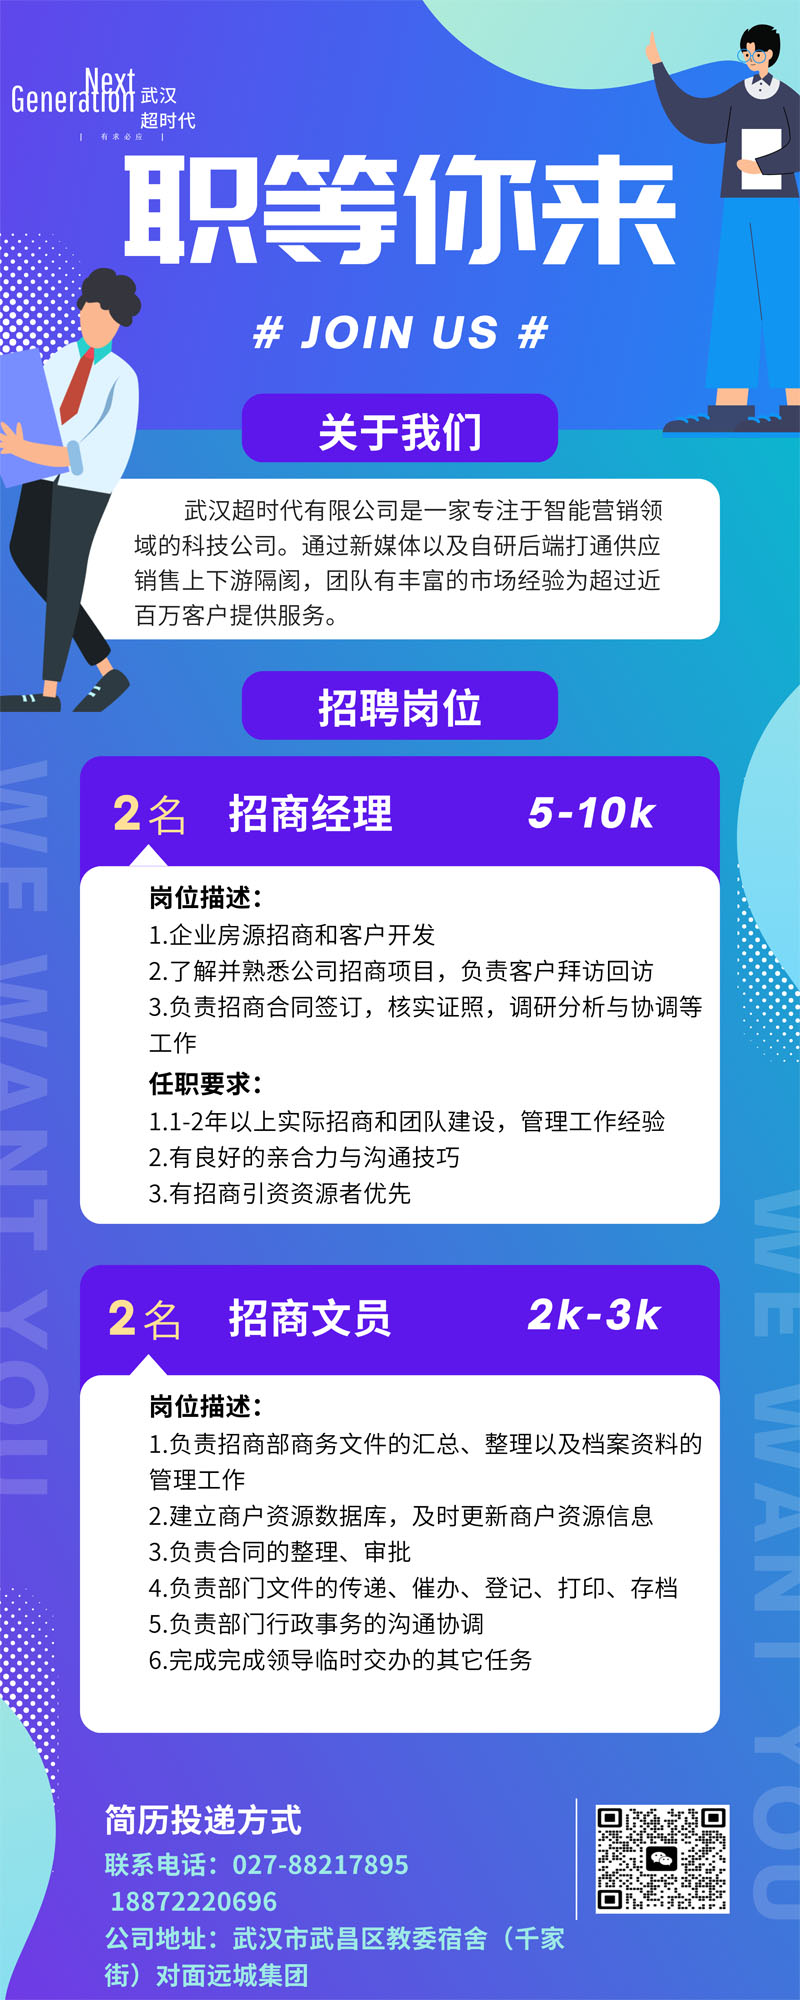 Wuhan Super Generation e-commerce Co., LTD recruitment advertising